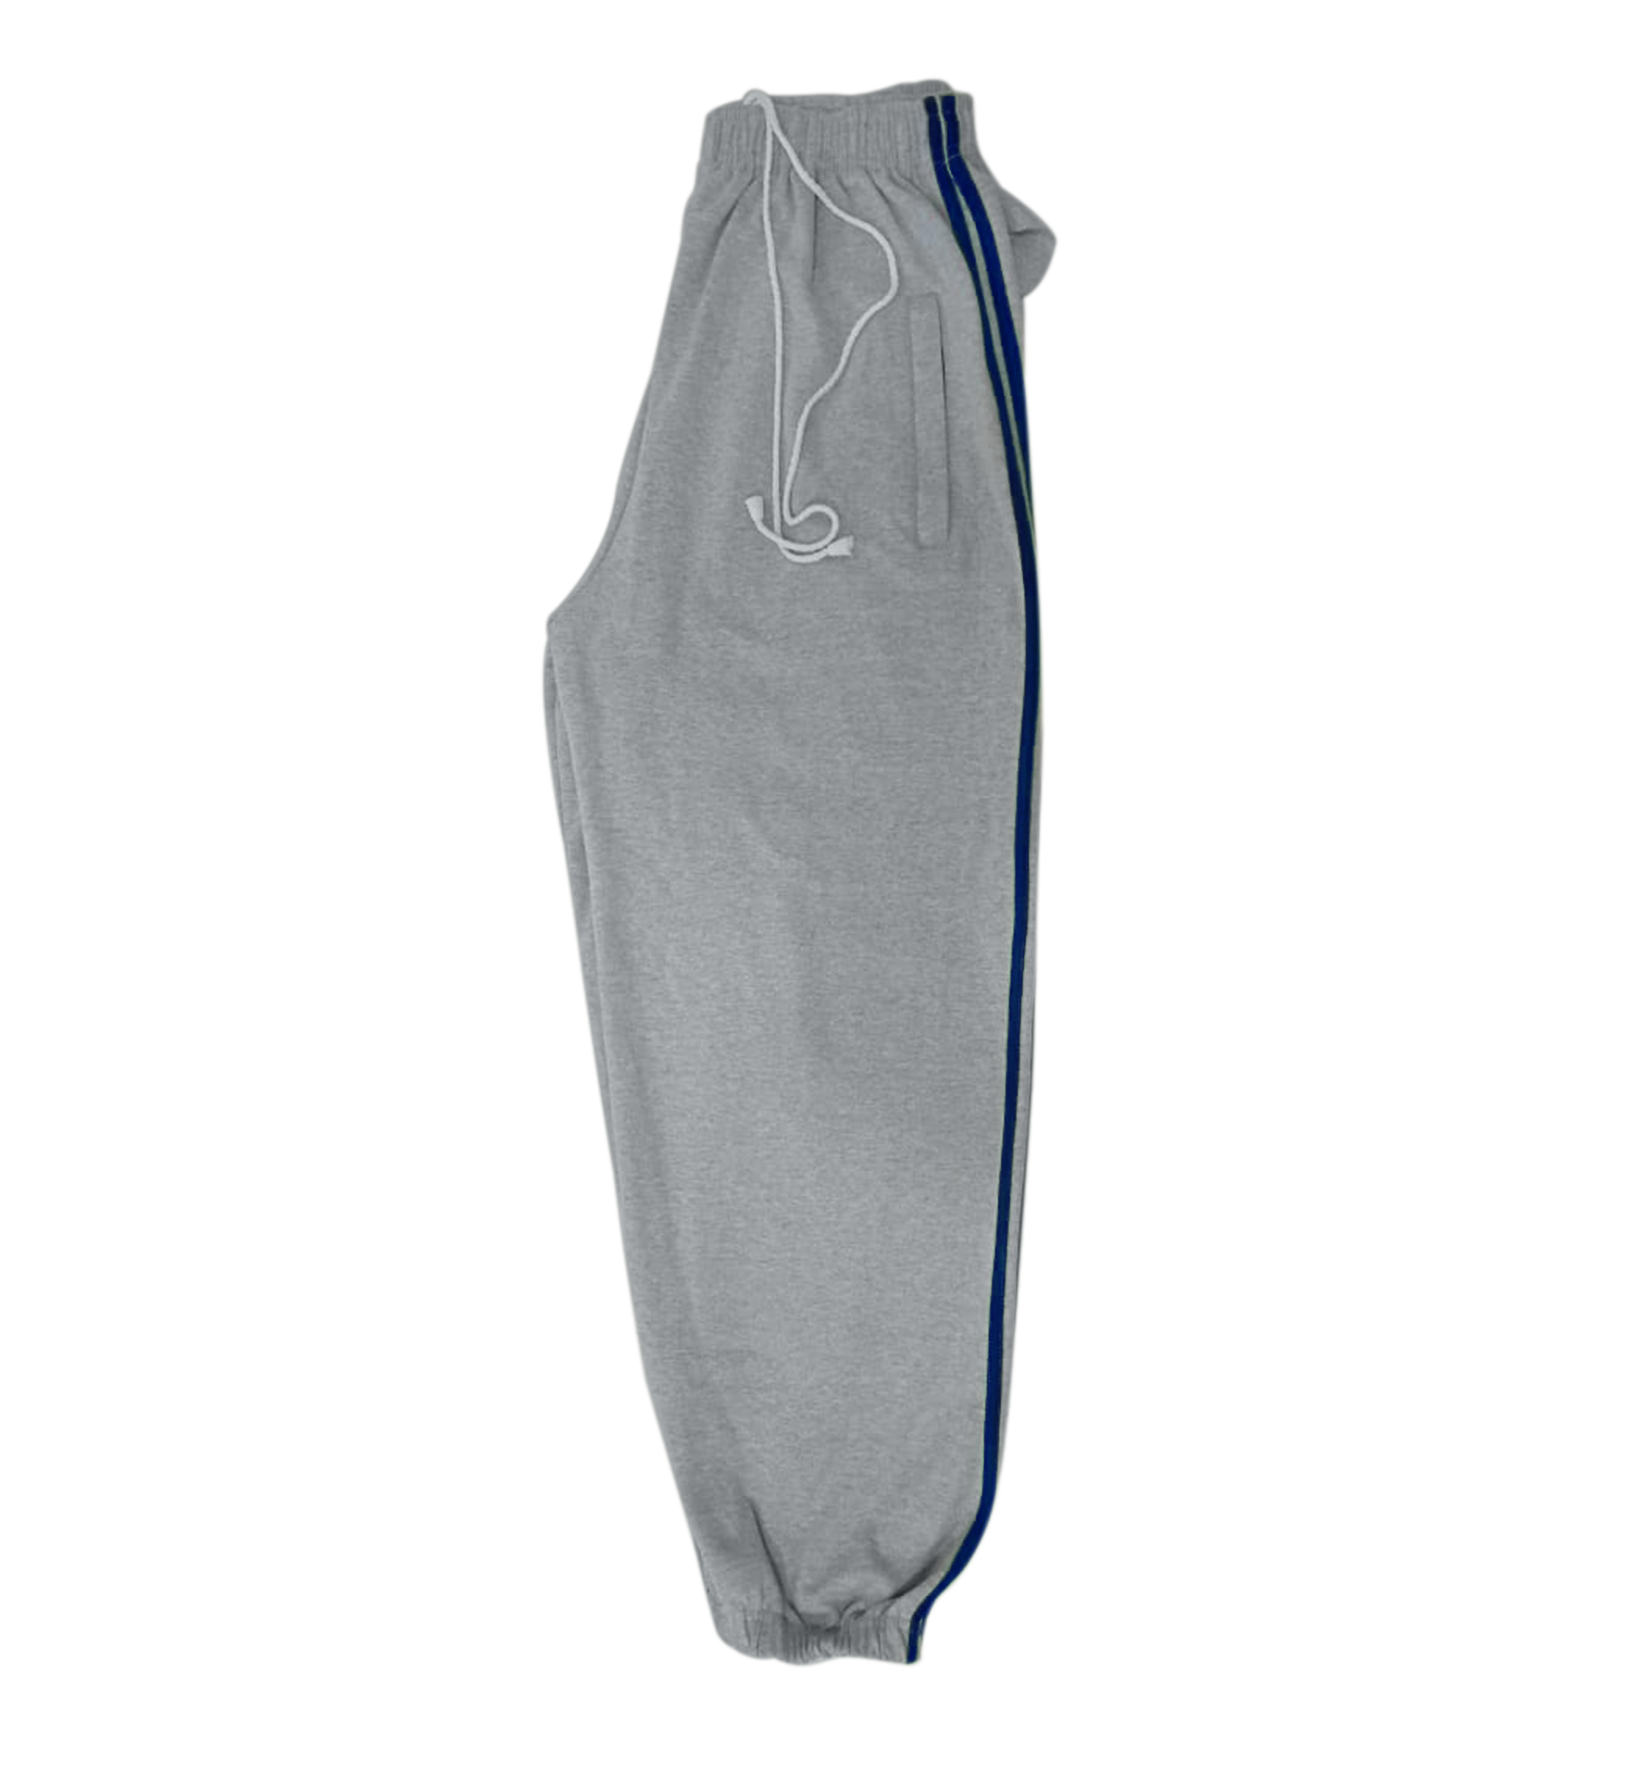 Generation's Sports Trouser - Youniform